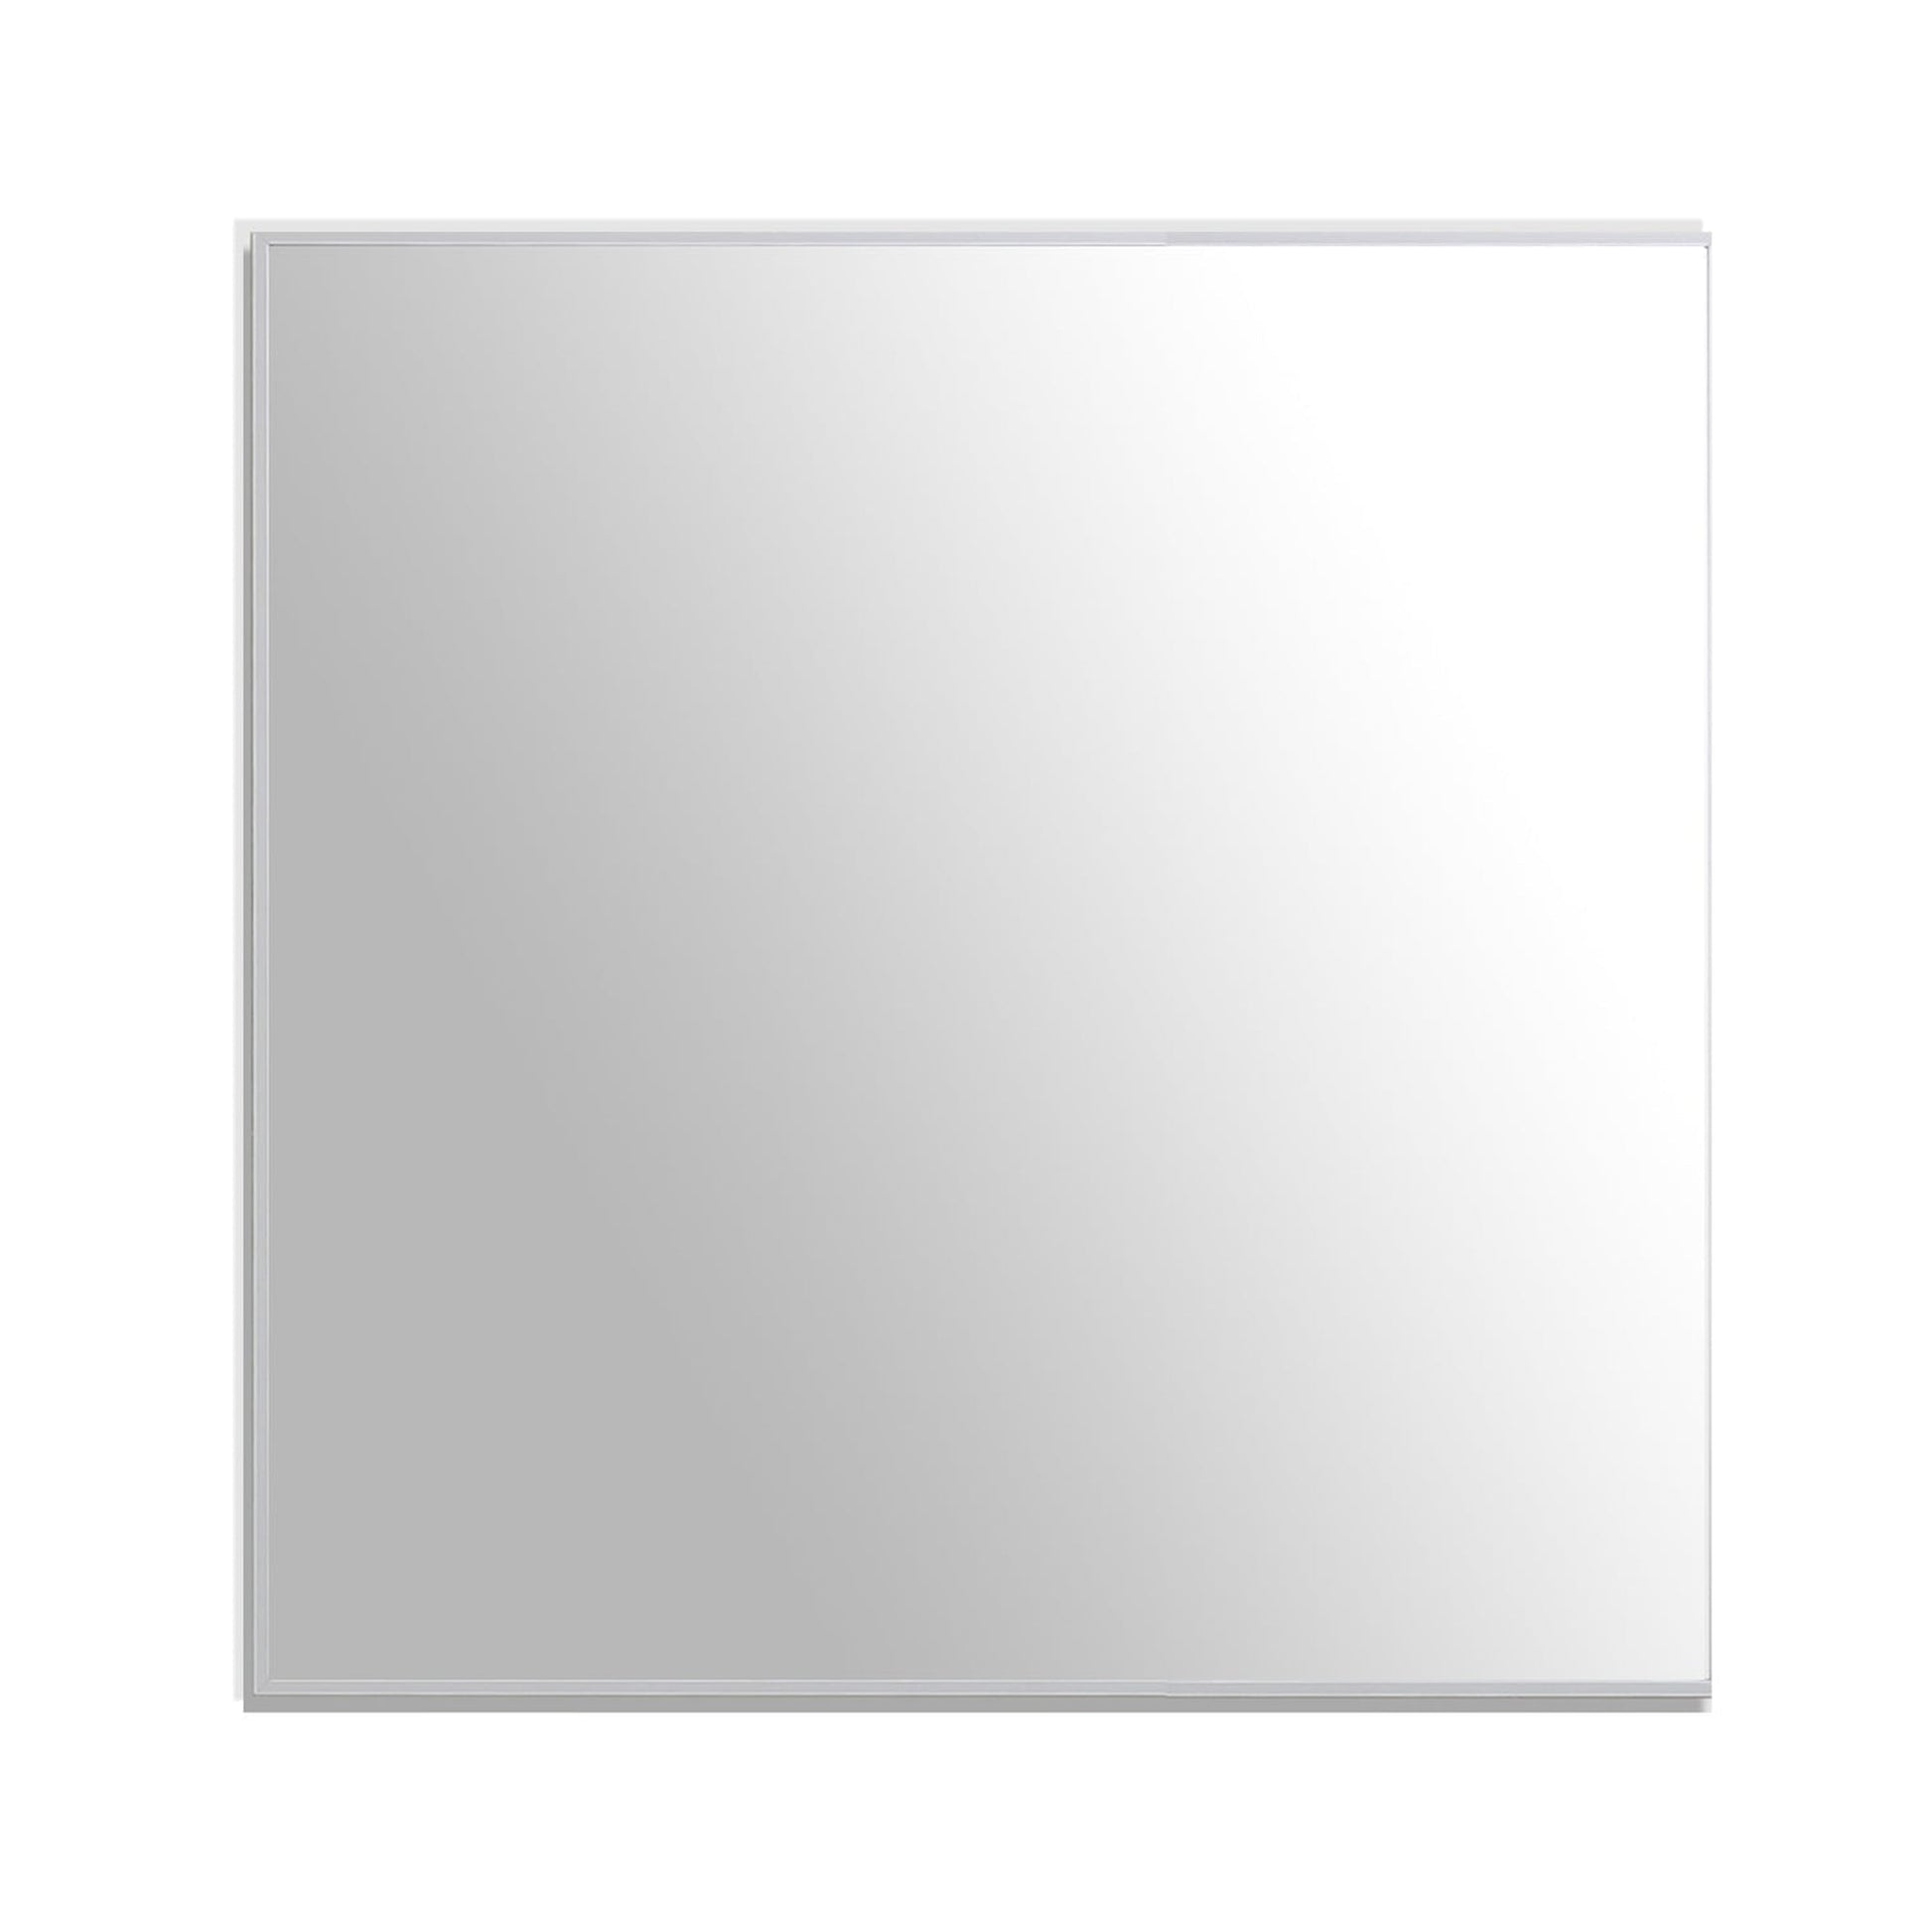 Eviva Sax 30" x 30" Brushed Metal Framed Bathroom Wall-Mounted Mirror